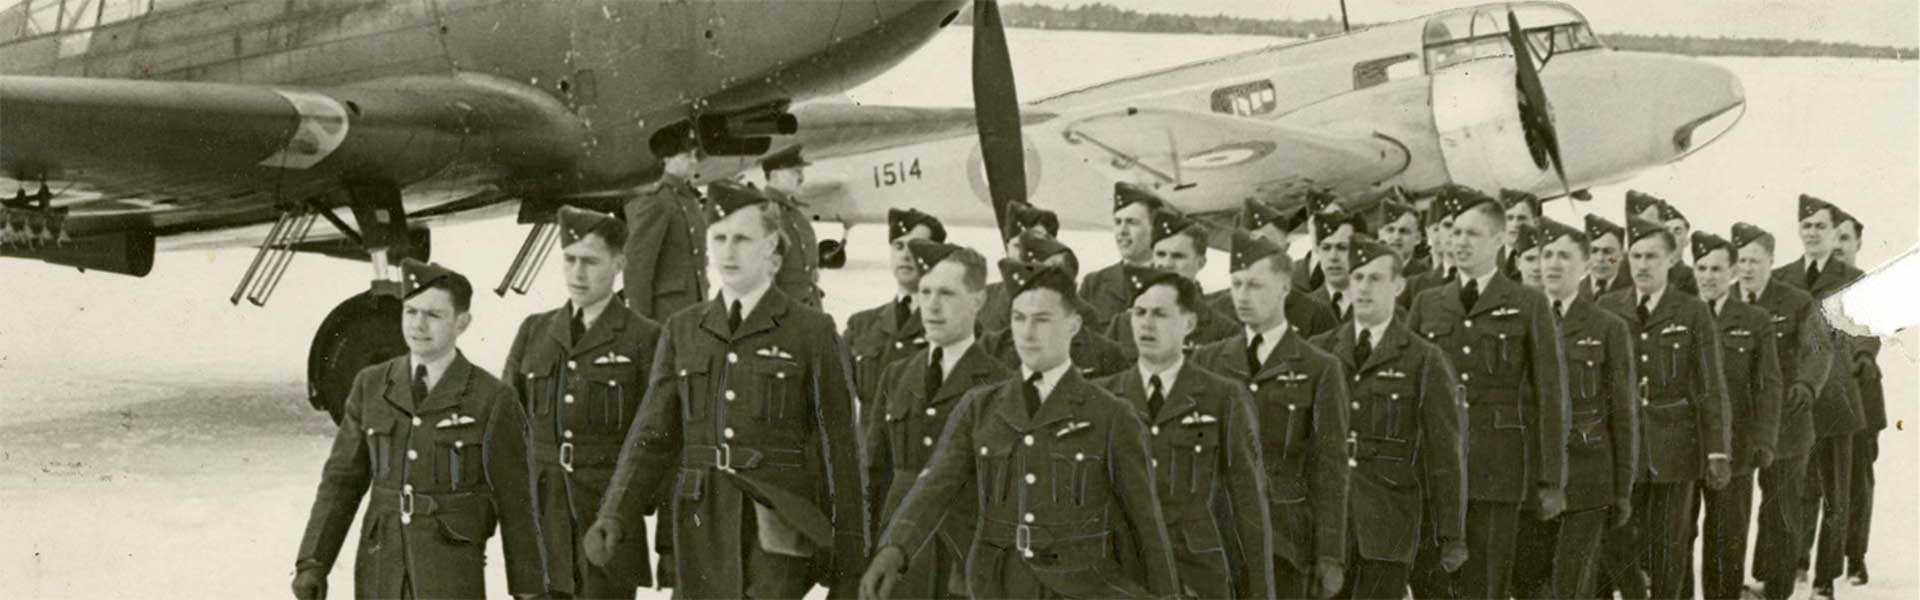 WW2 Borden Commonwealth Air Training banner